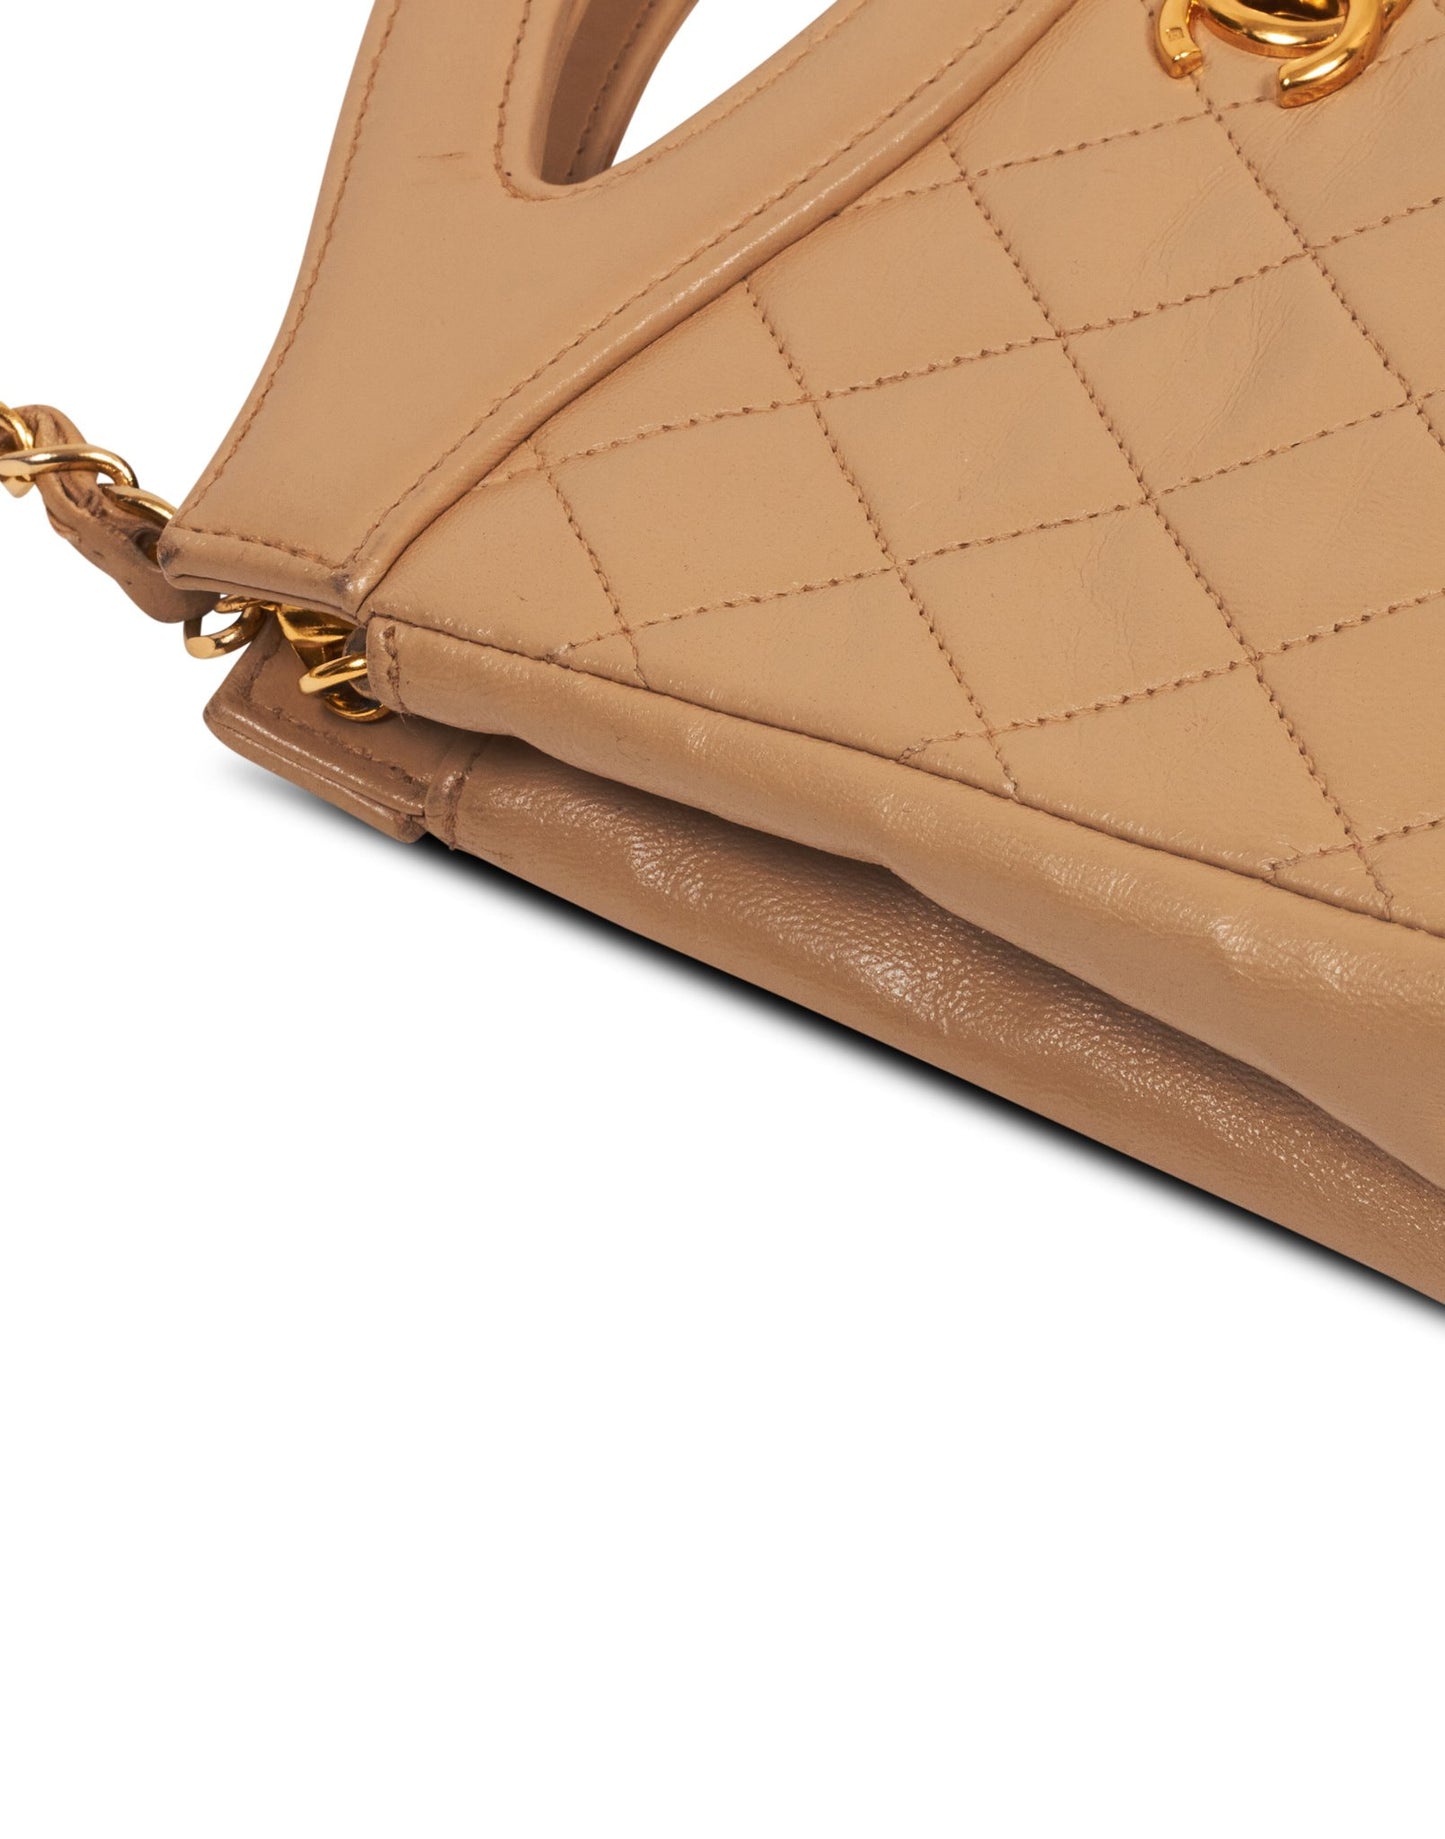 Chanel Beige Lambskin Mini Convertible Chain Shoulder Bag